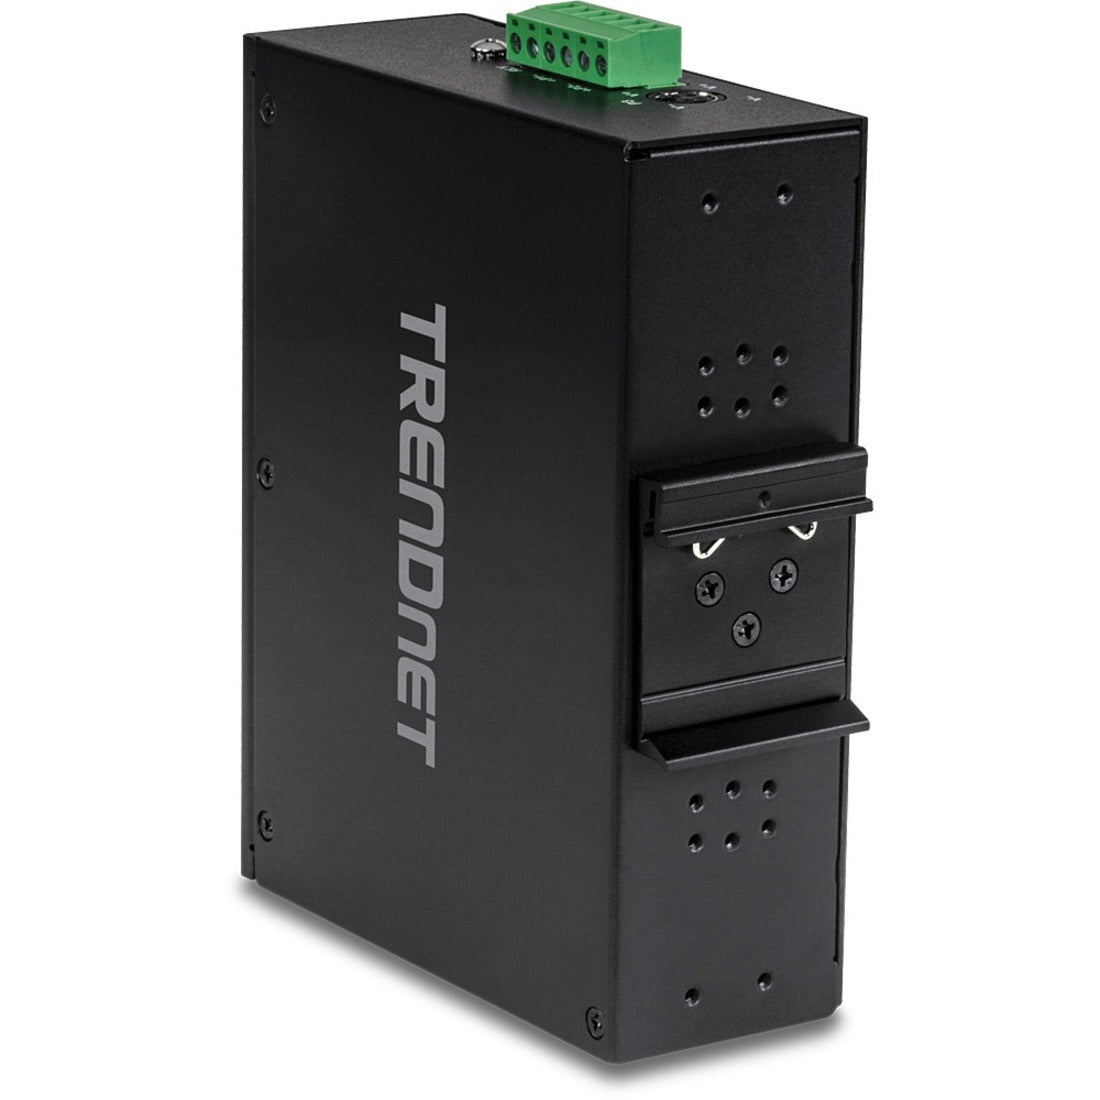 TRENDnet TI-PG162 16-Port Industrial Gigabit PoE, Hardened Unmanaged Switch, Lifetime Protection